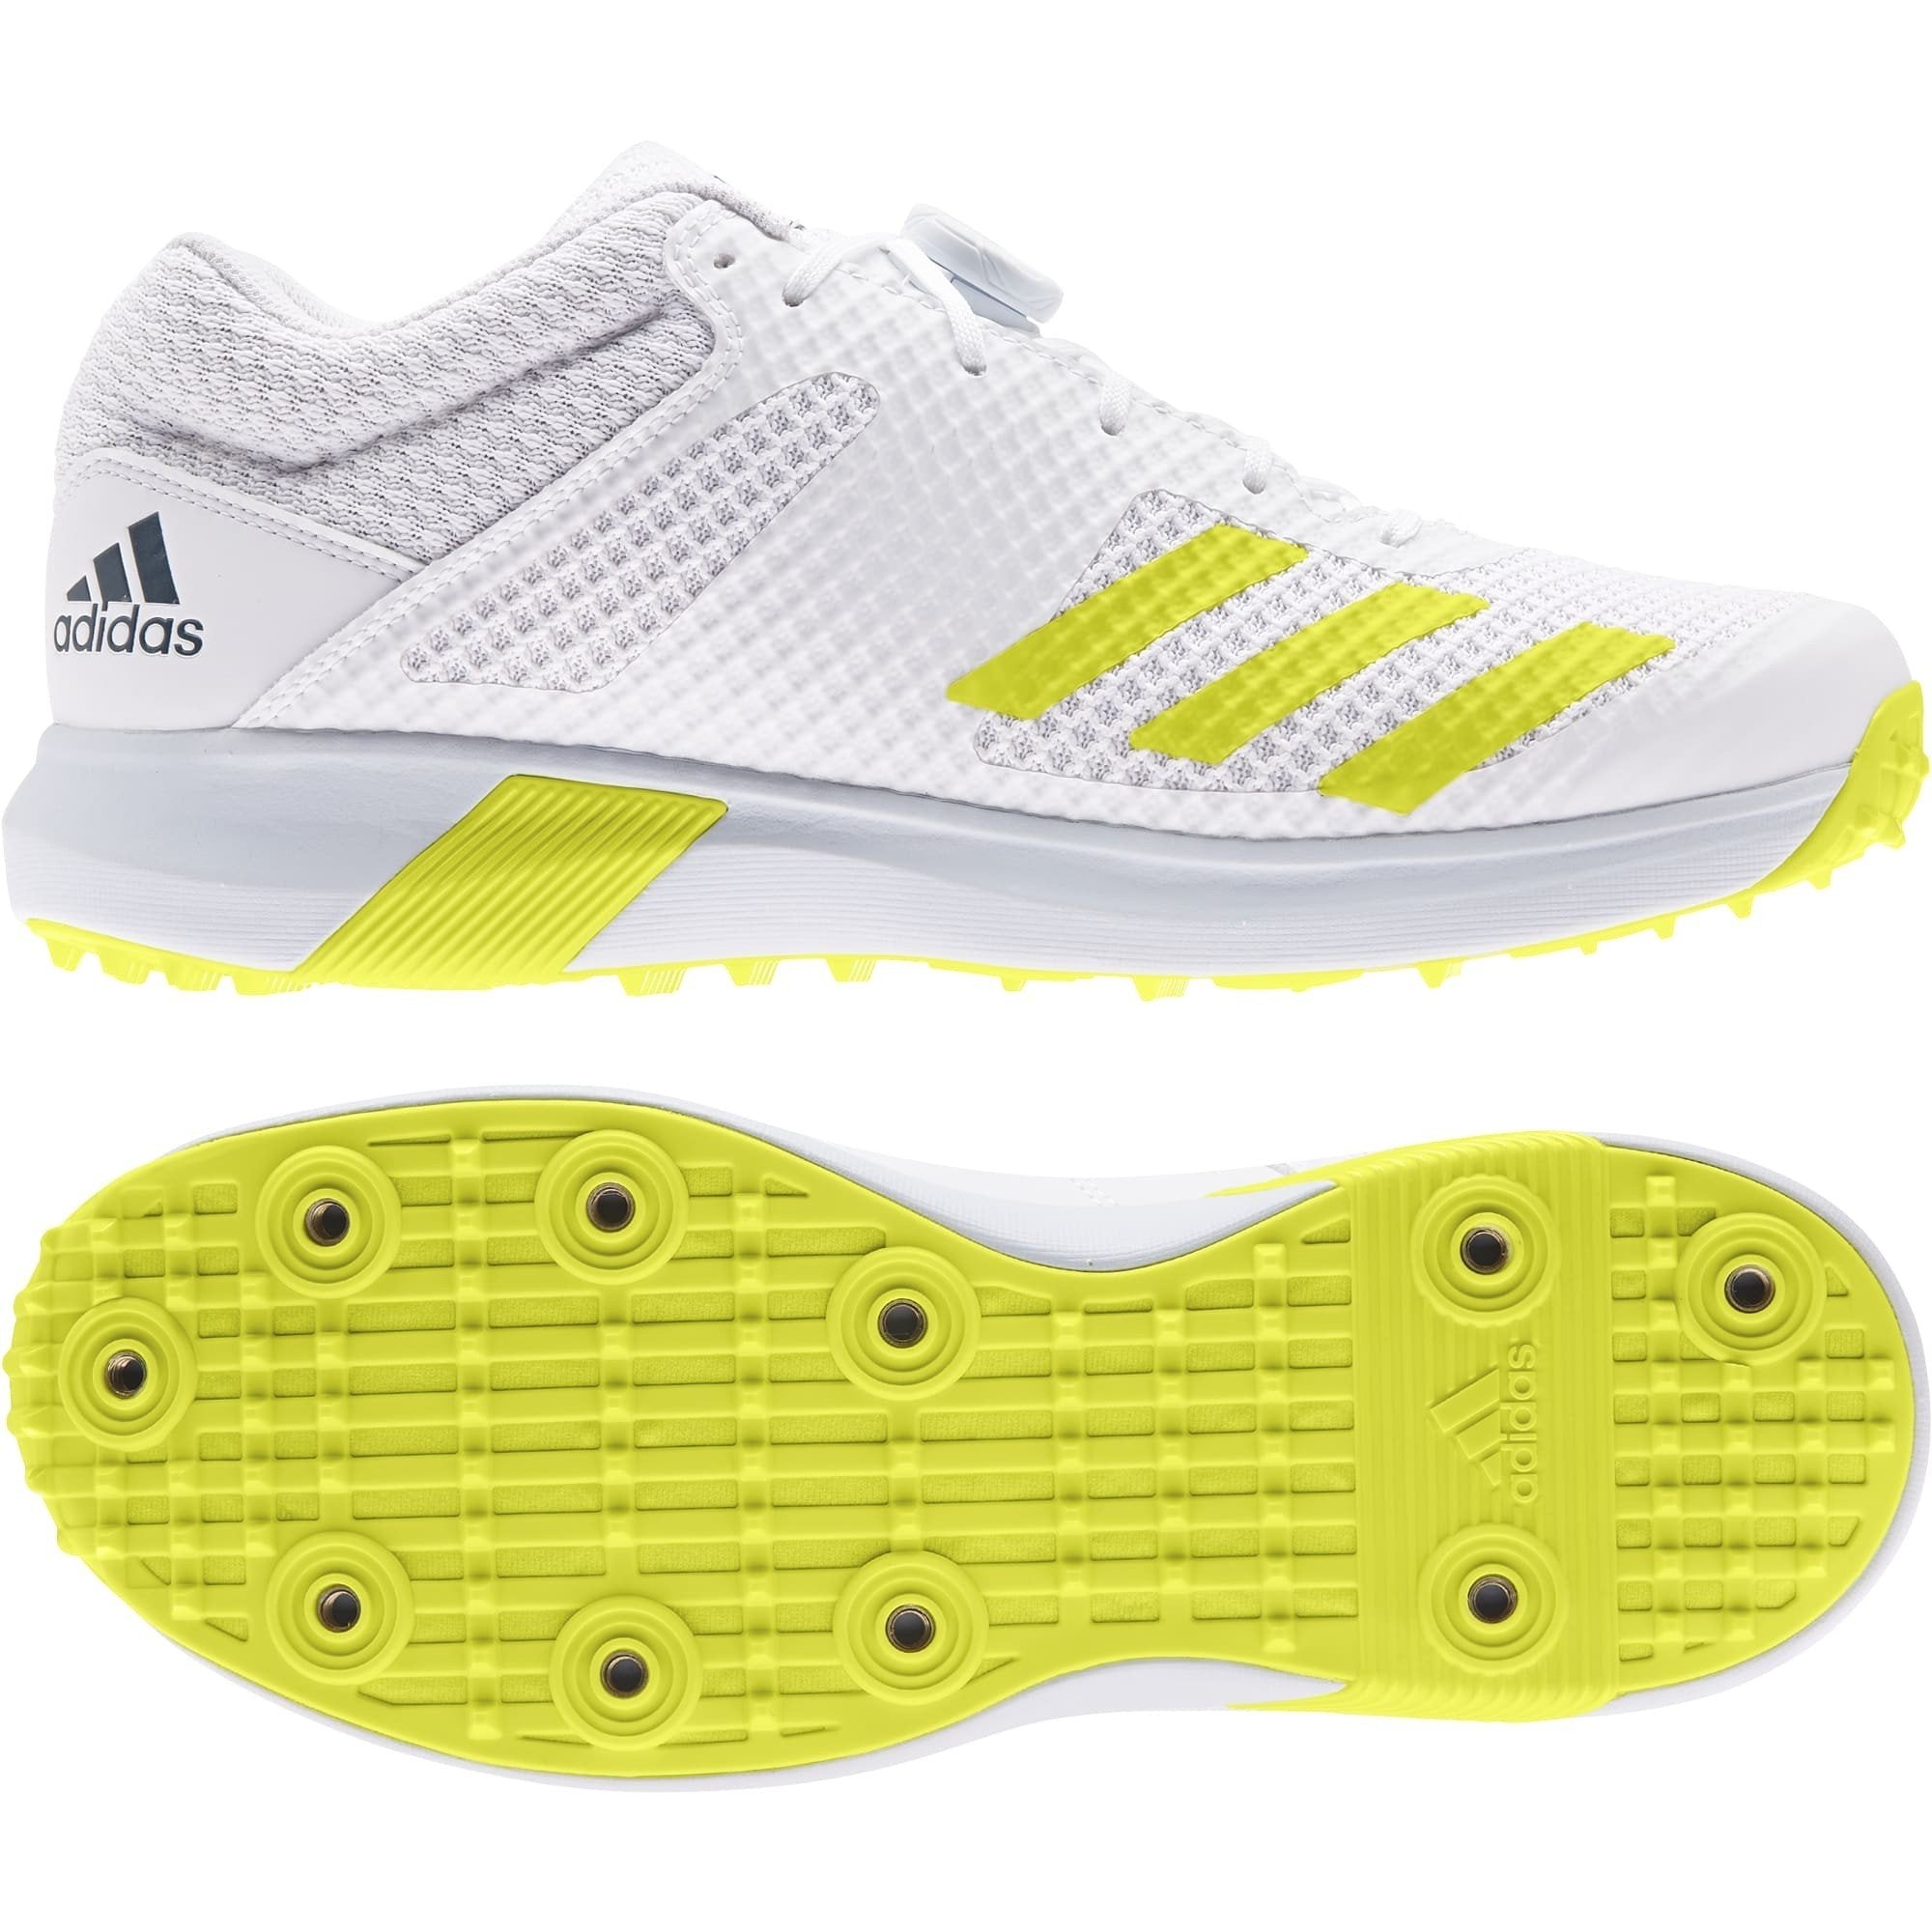 Adidas AdiPower Vector Midbowling Cricket Shoes